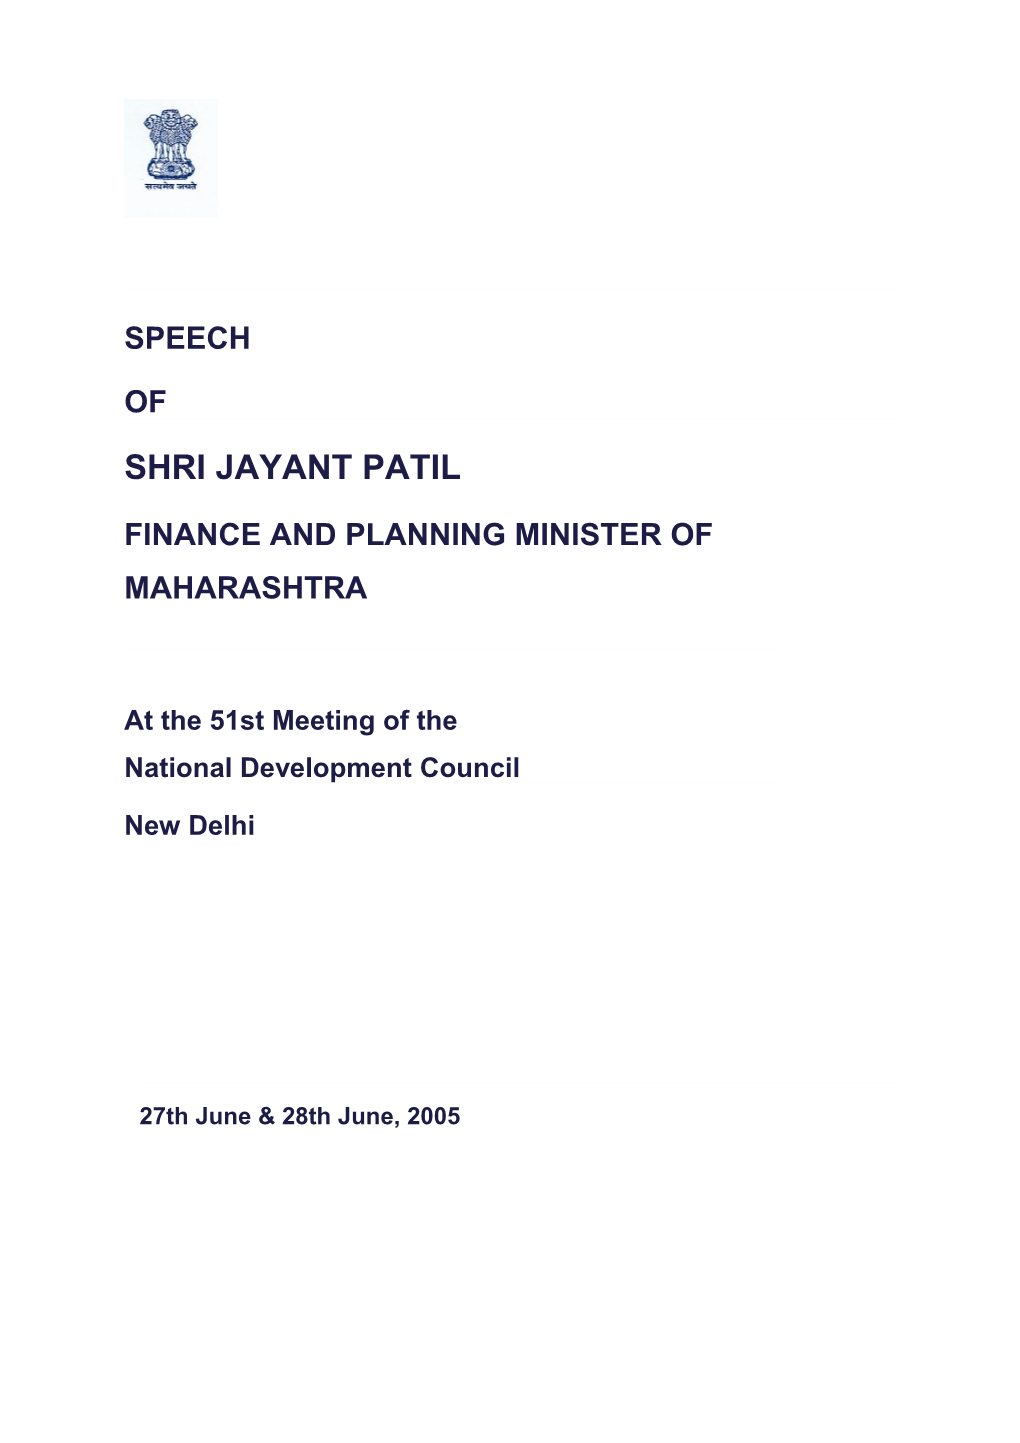 Shri Jayant Patil